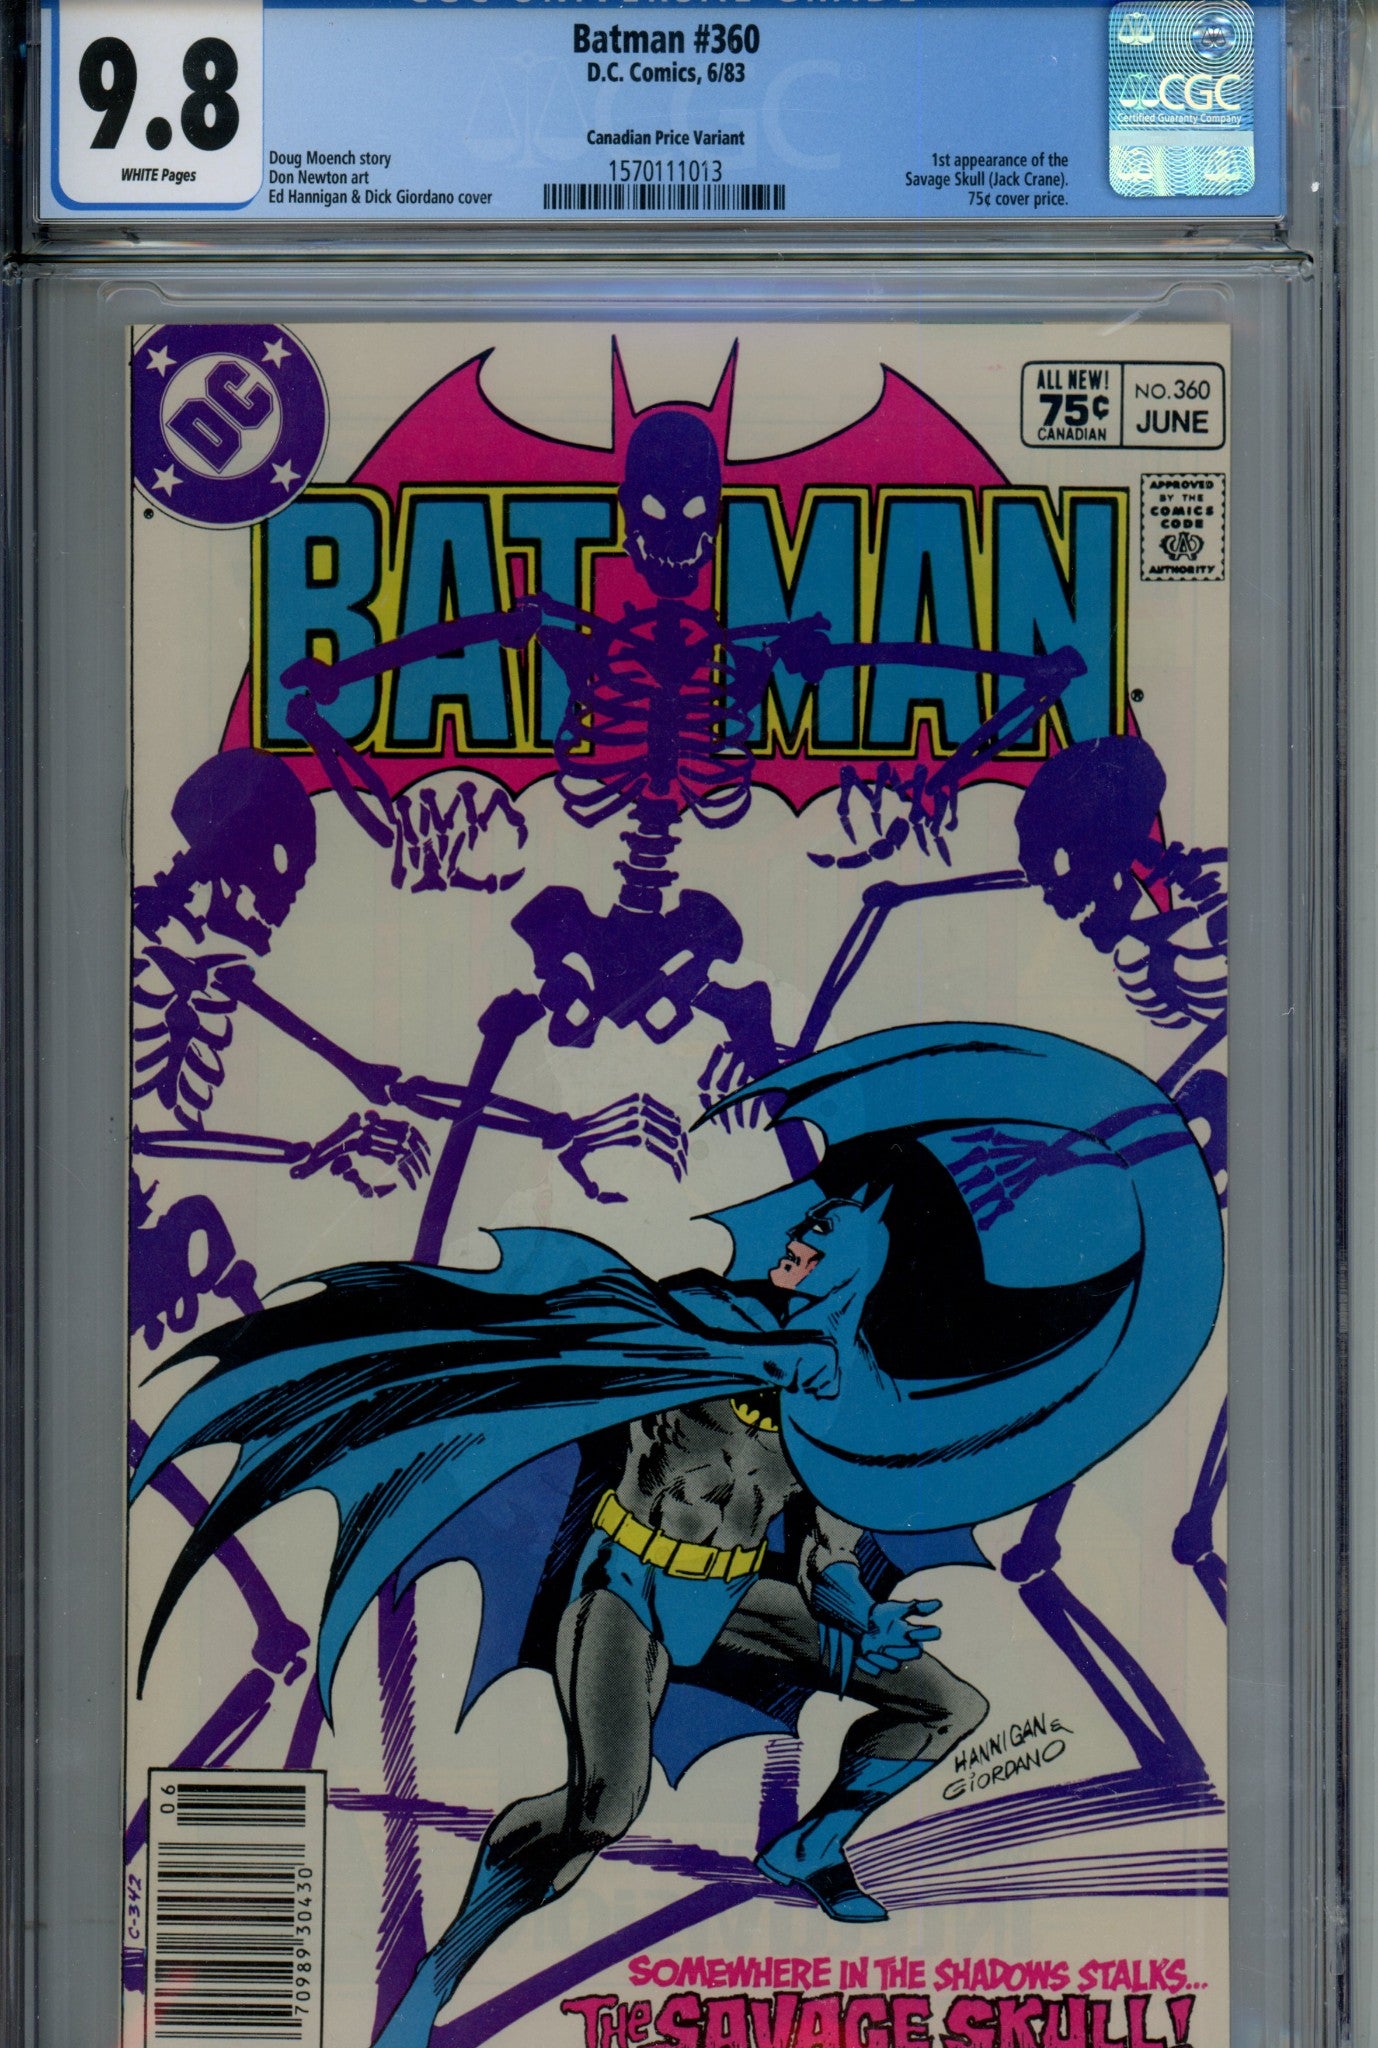 Batman Vol 1 360 Canadian Price Variant CGC 9.8 (1983)